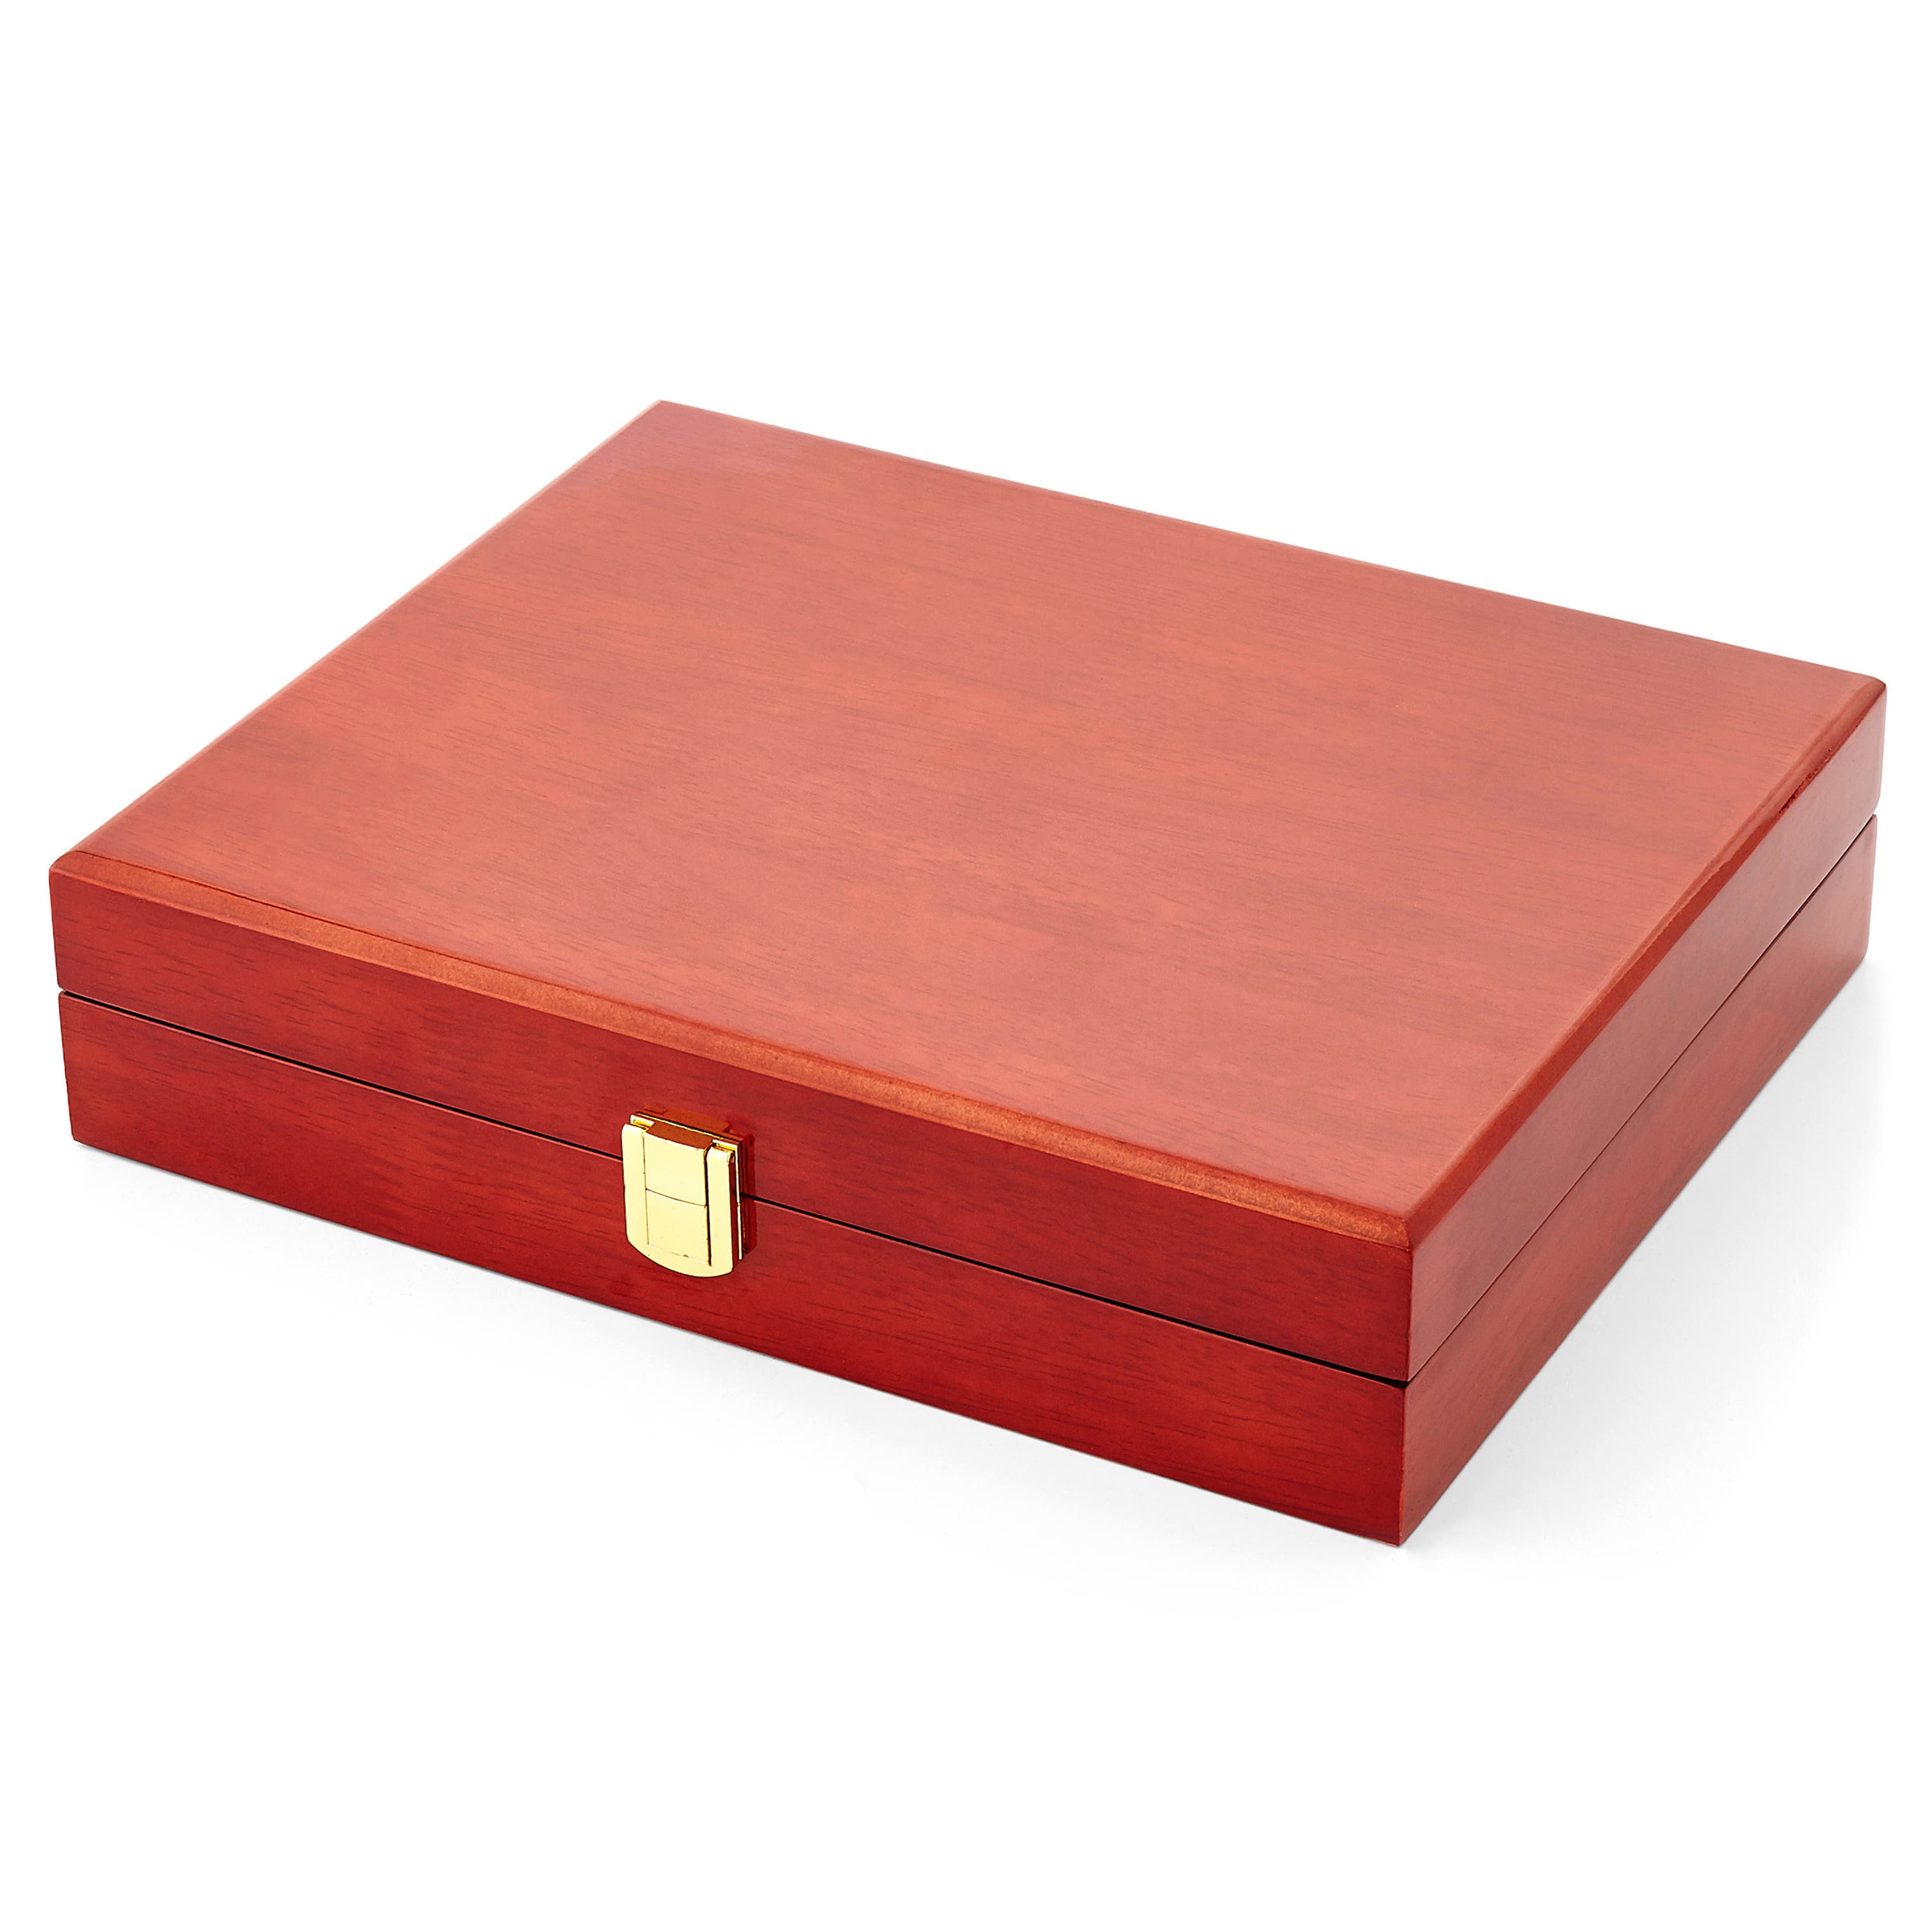 Terracotta Veneer Cufflinks Box For 30 Cufflink Sets